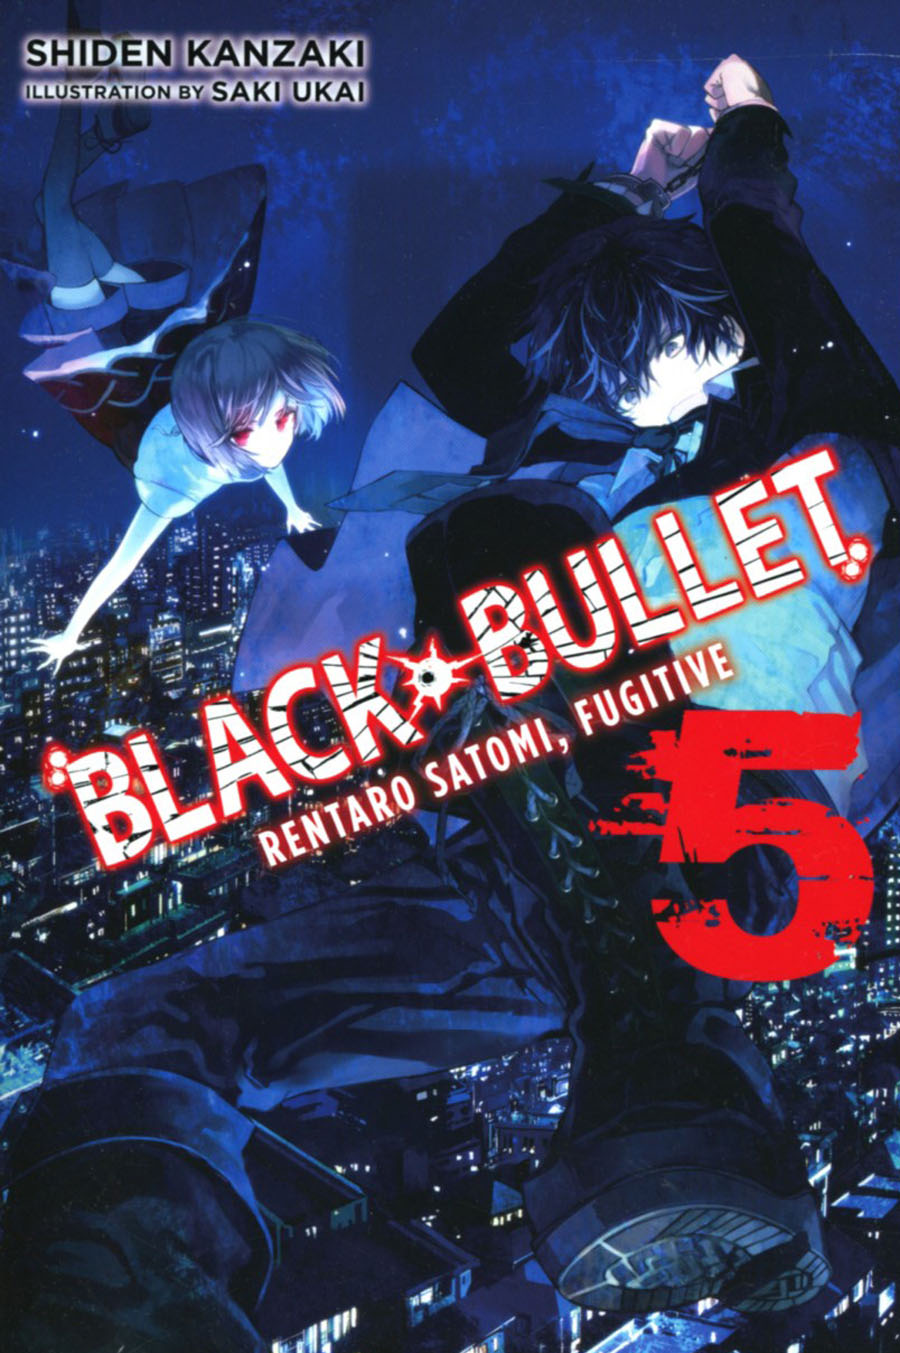 Black Bullet Light Novel Vol 5 Rentaro Satomi Fugitive